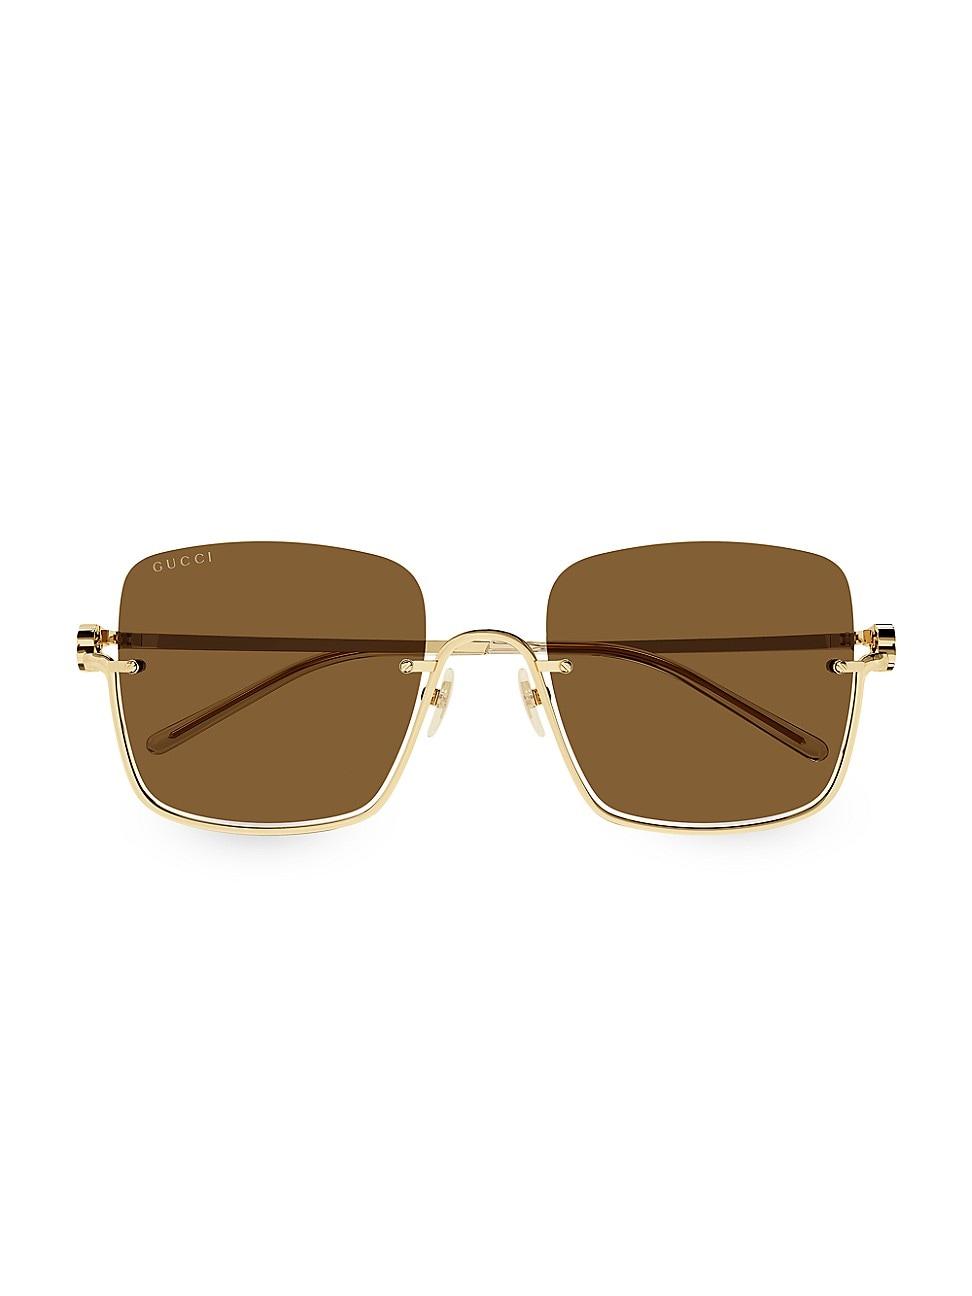 Gucci GG Upside Down Square Sunglasses in Natural | Lyst